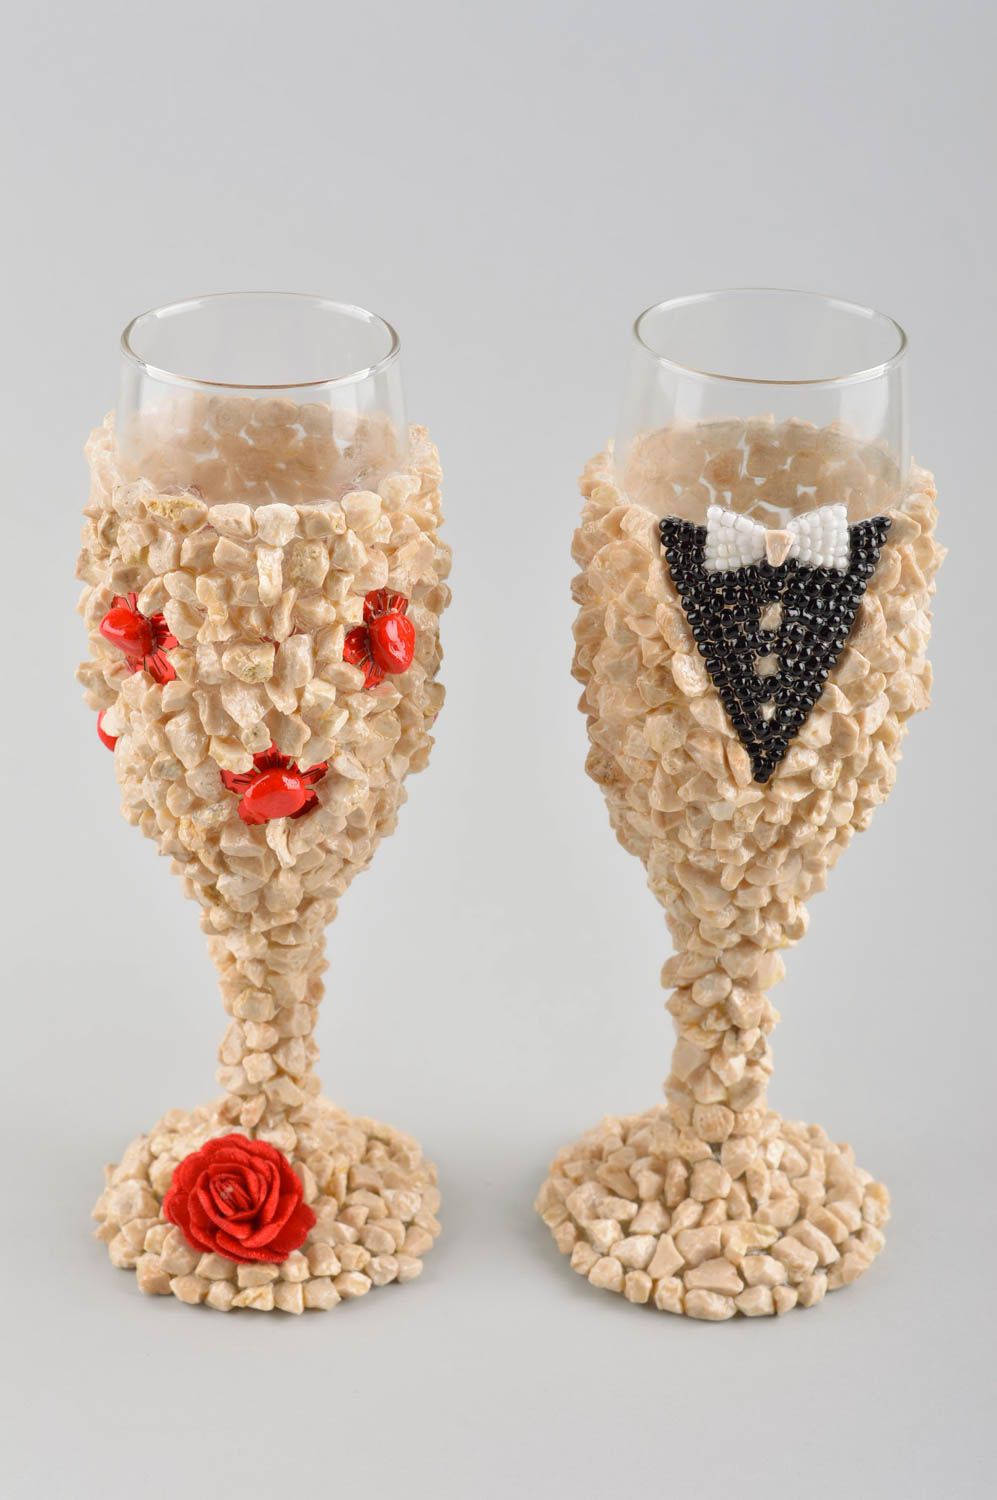 Stylish handmade champagne glasses 2 wedding glasses stemware ideas wedding gift photo 2